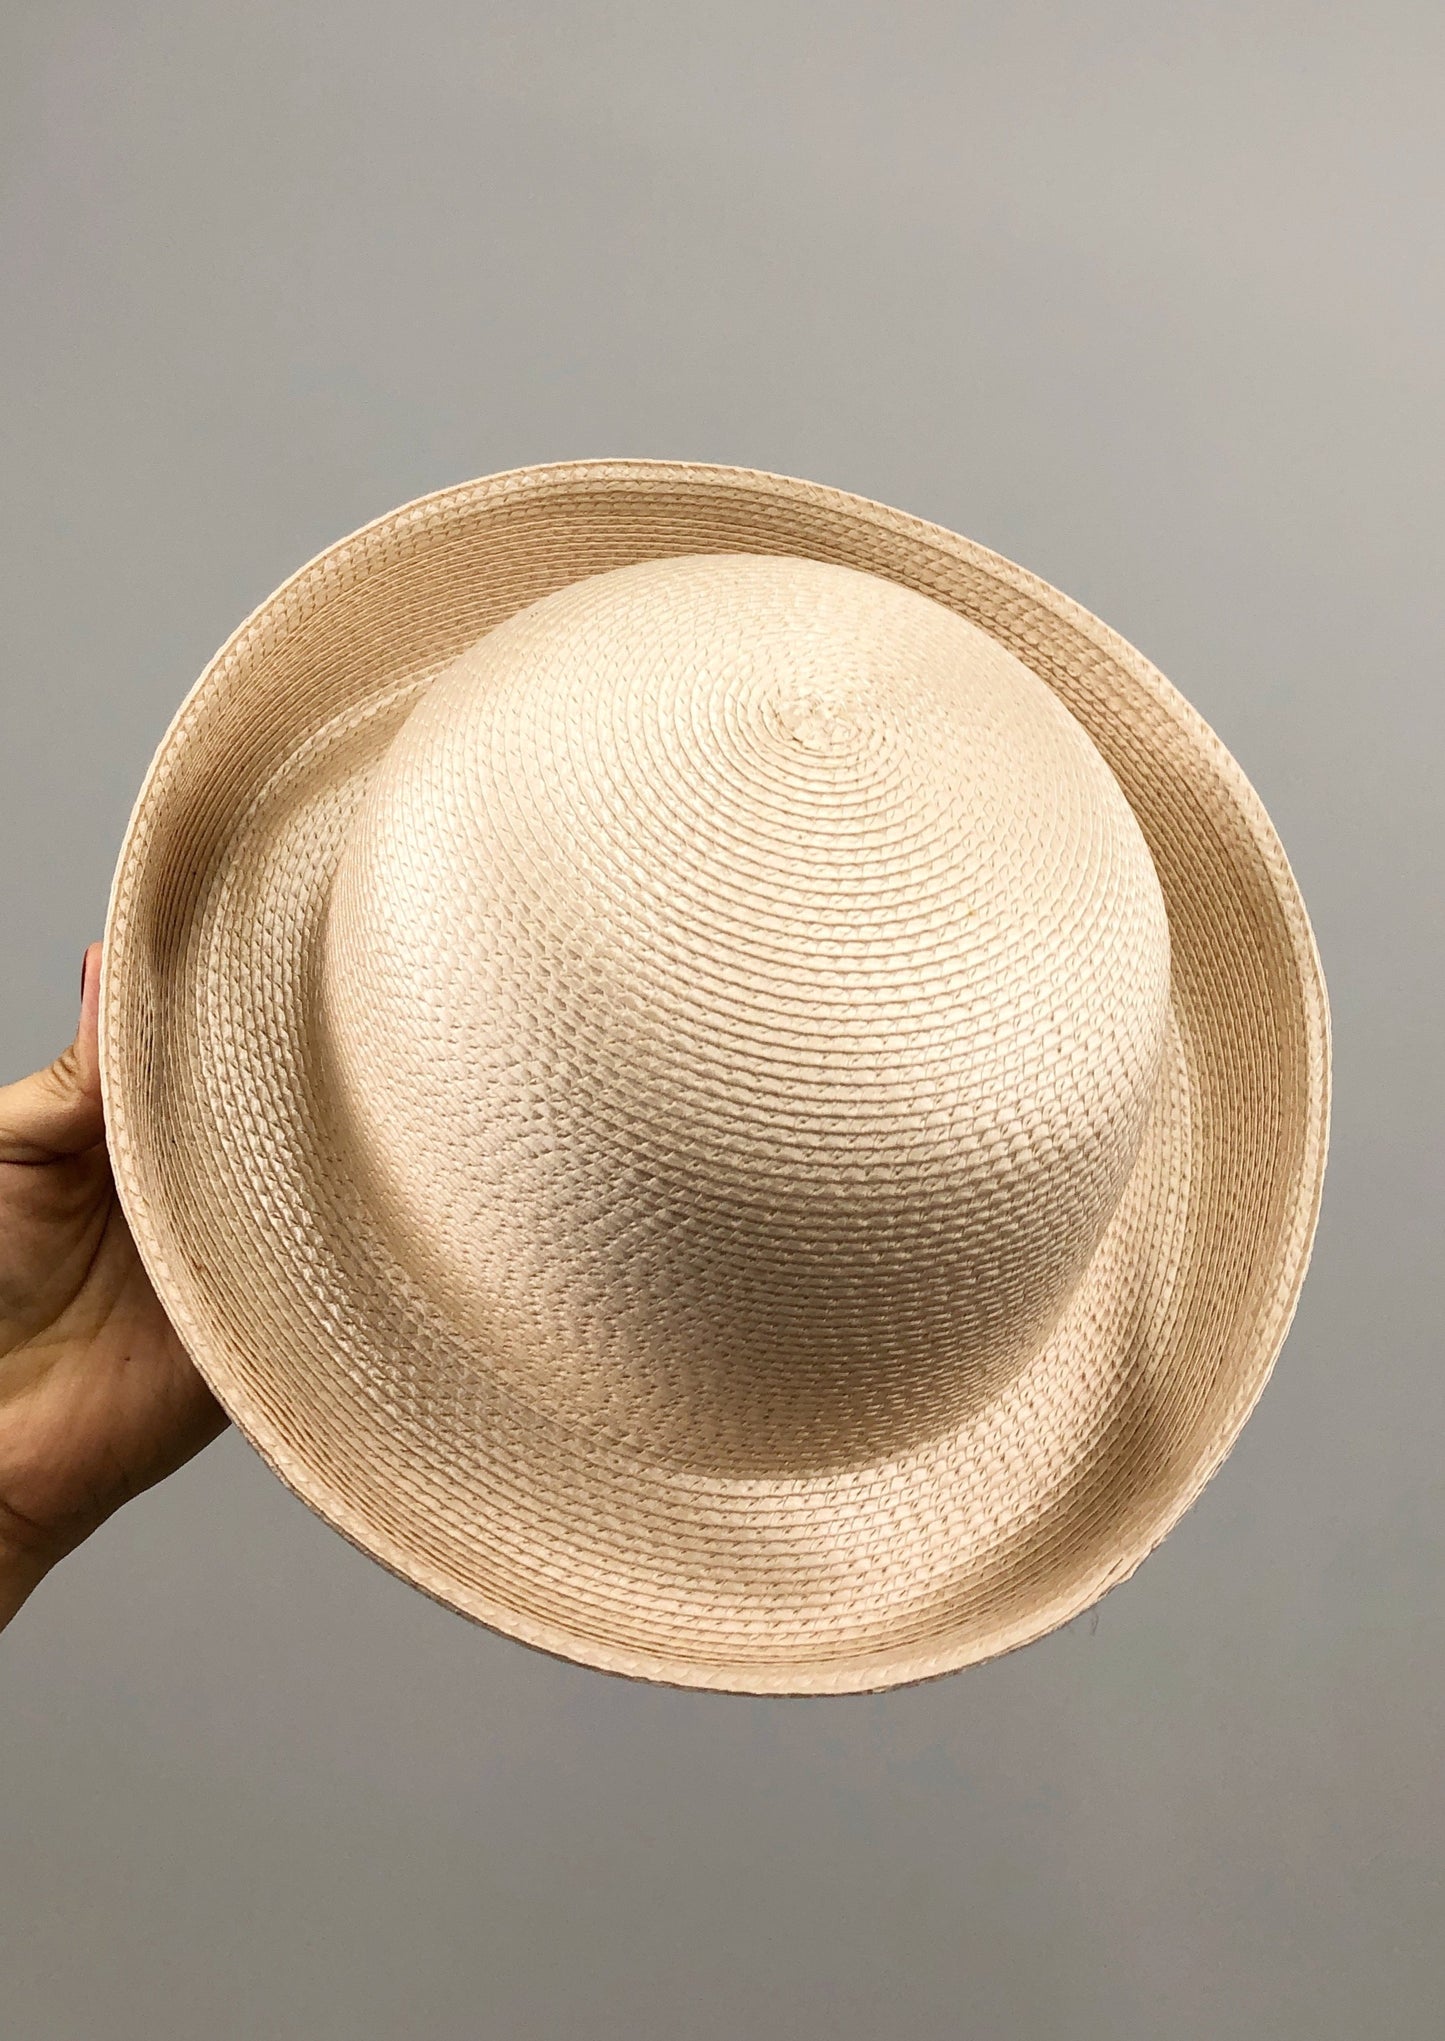 The Rivelli Hat